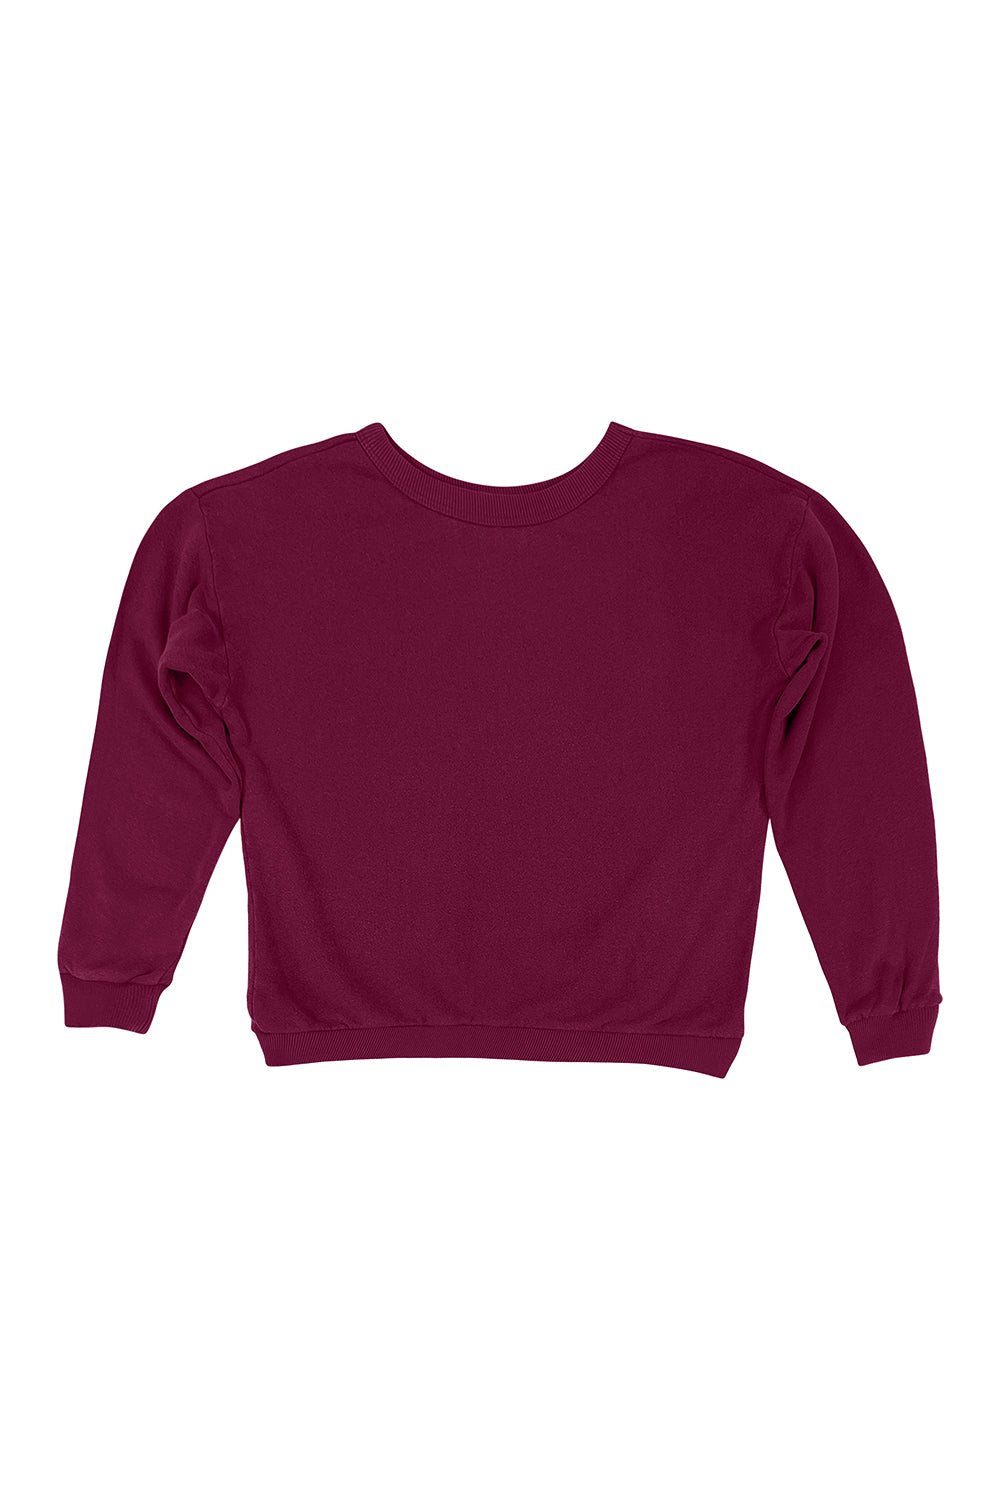 Crux Cropped Sweatshirt | Jungmaven Hemp Clothing & Accessories / Color: Burgundy